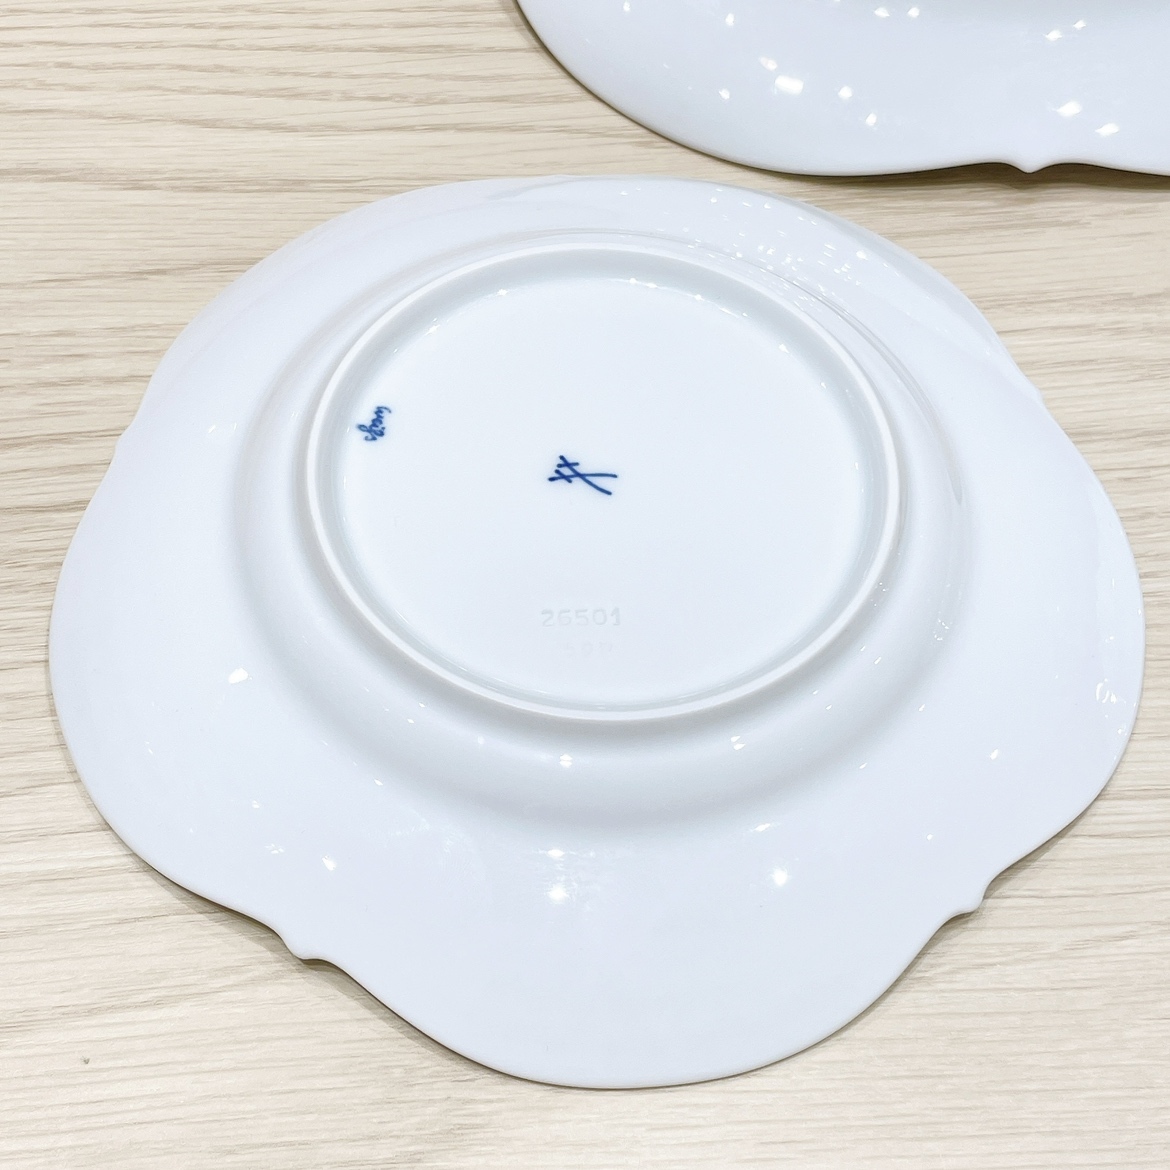 [OMO402HM]Meissen Meissen белый relief 3 тарелка комплект ( большая тарелка 1 маленькая тарелка 2) посуда plate большая тарелка примерно 26cm маленькая тарелка примерно 19cm.. запад 1 иен ~